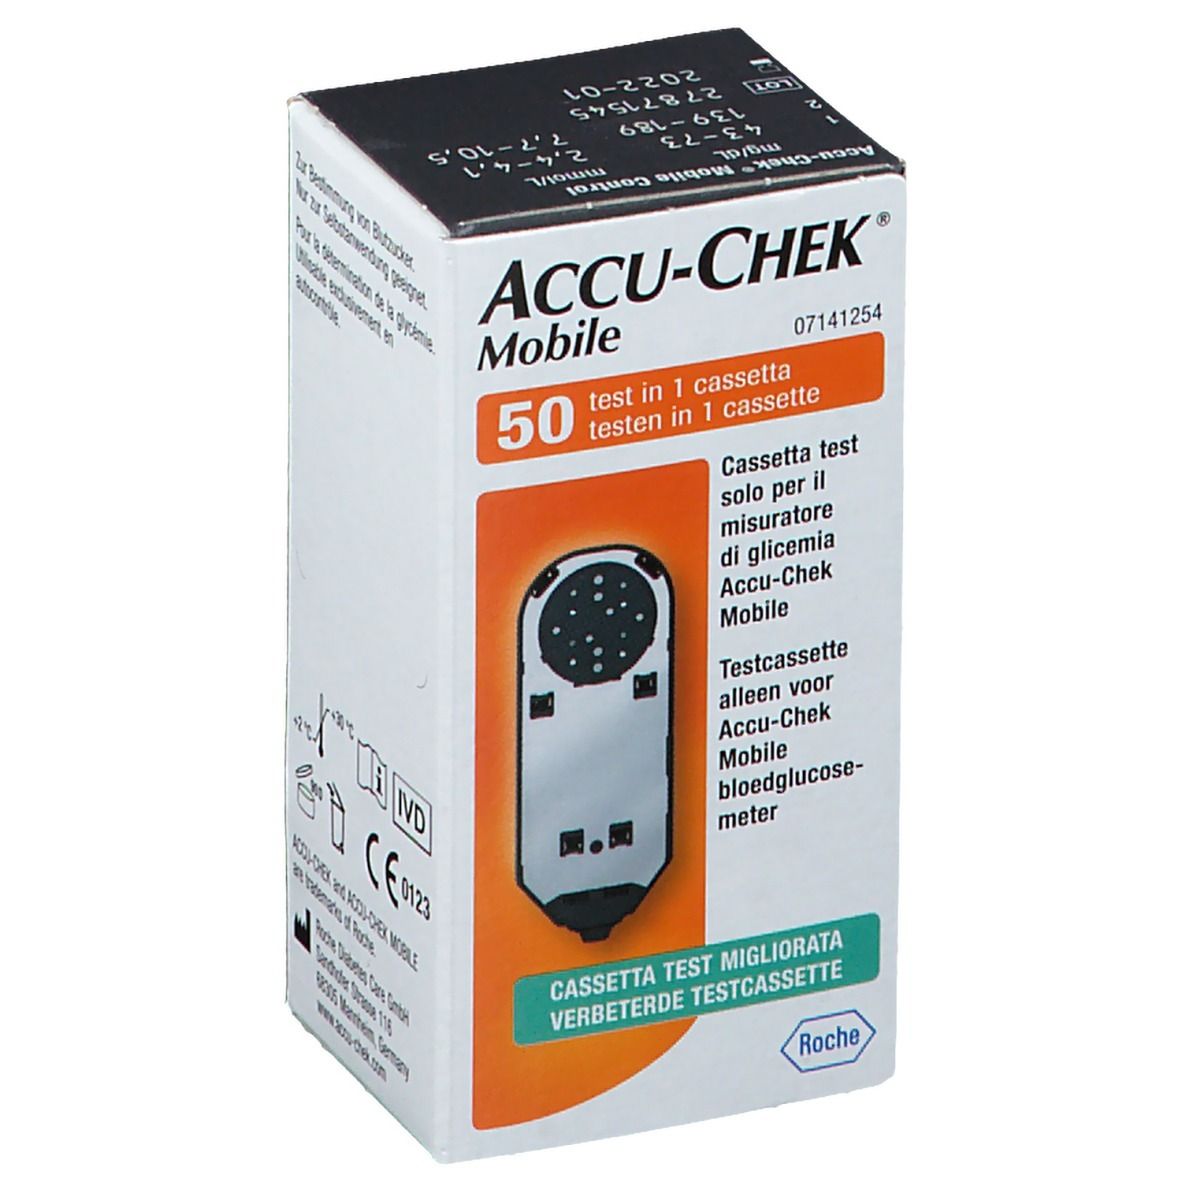 ACCU-CHEK® Mobile Cassette